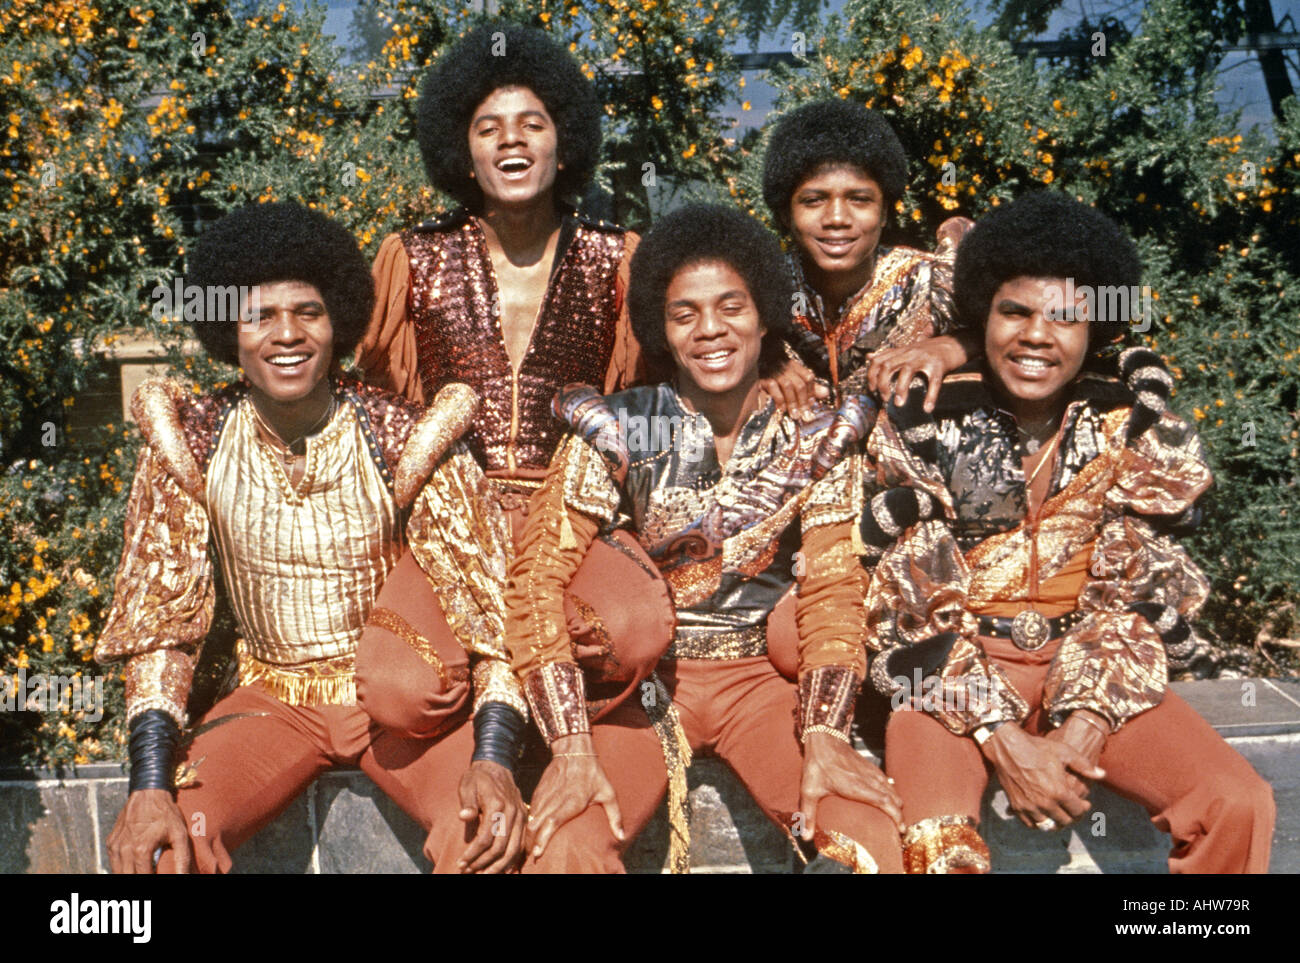 Jackson 5, Members, Songs, & the Jacksons